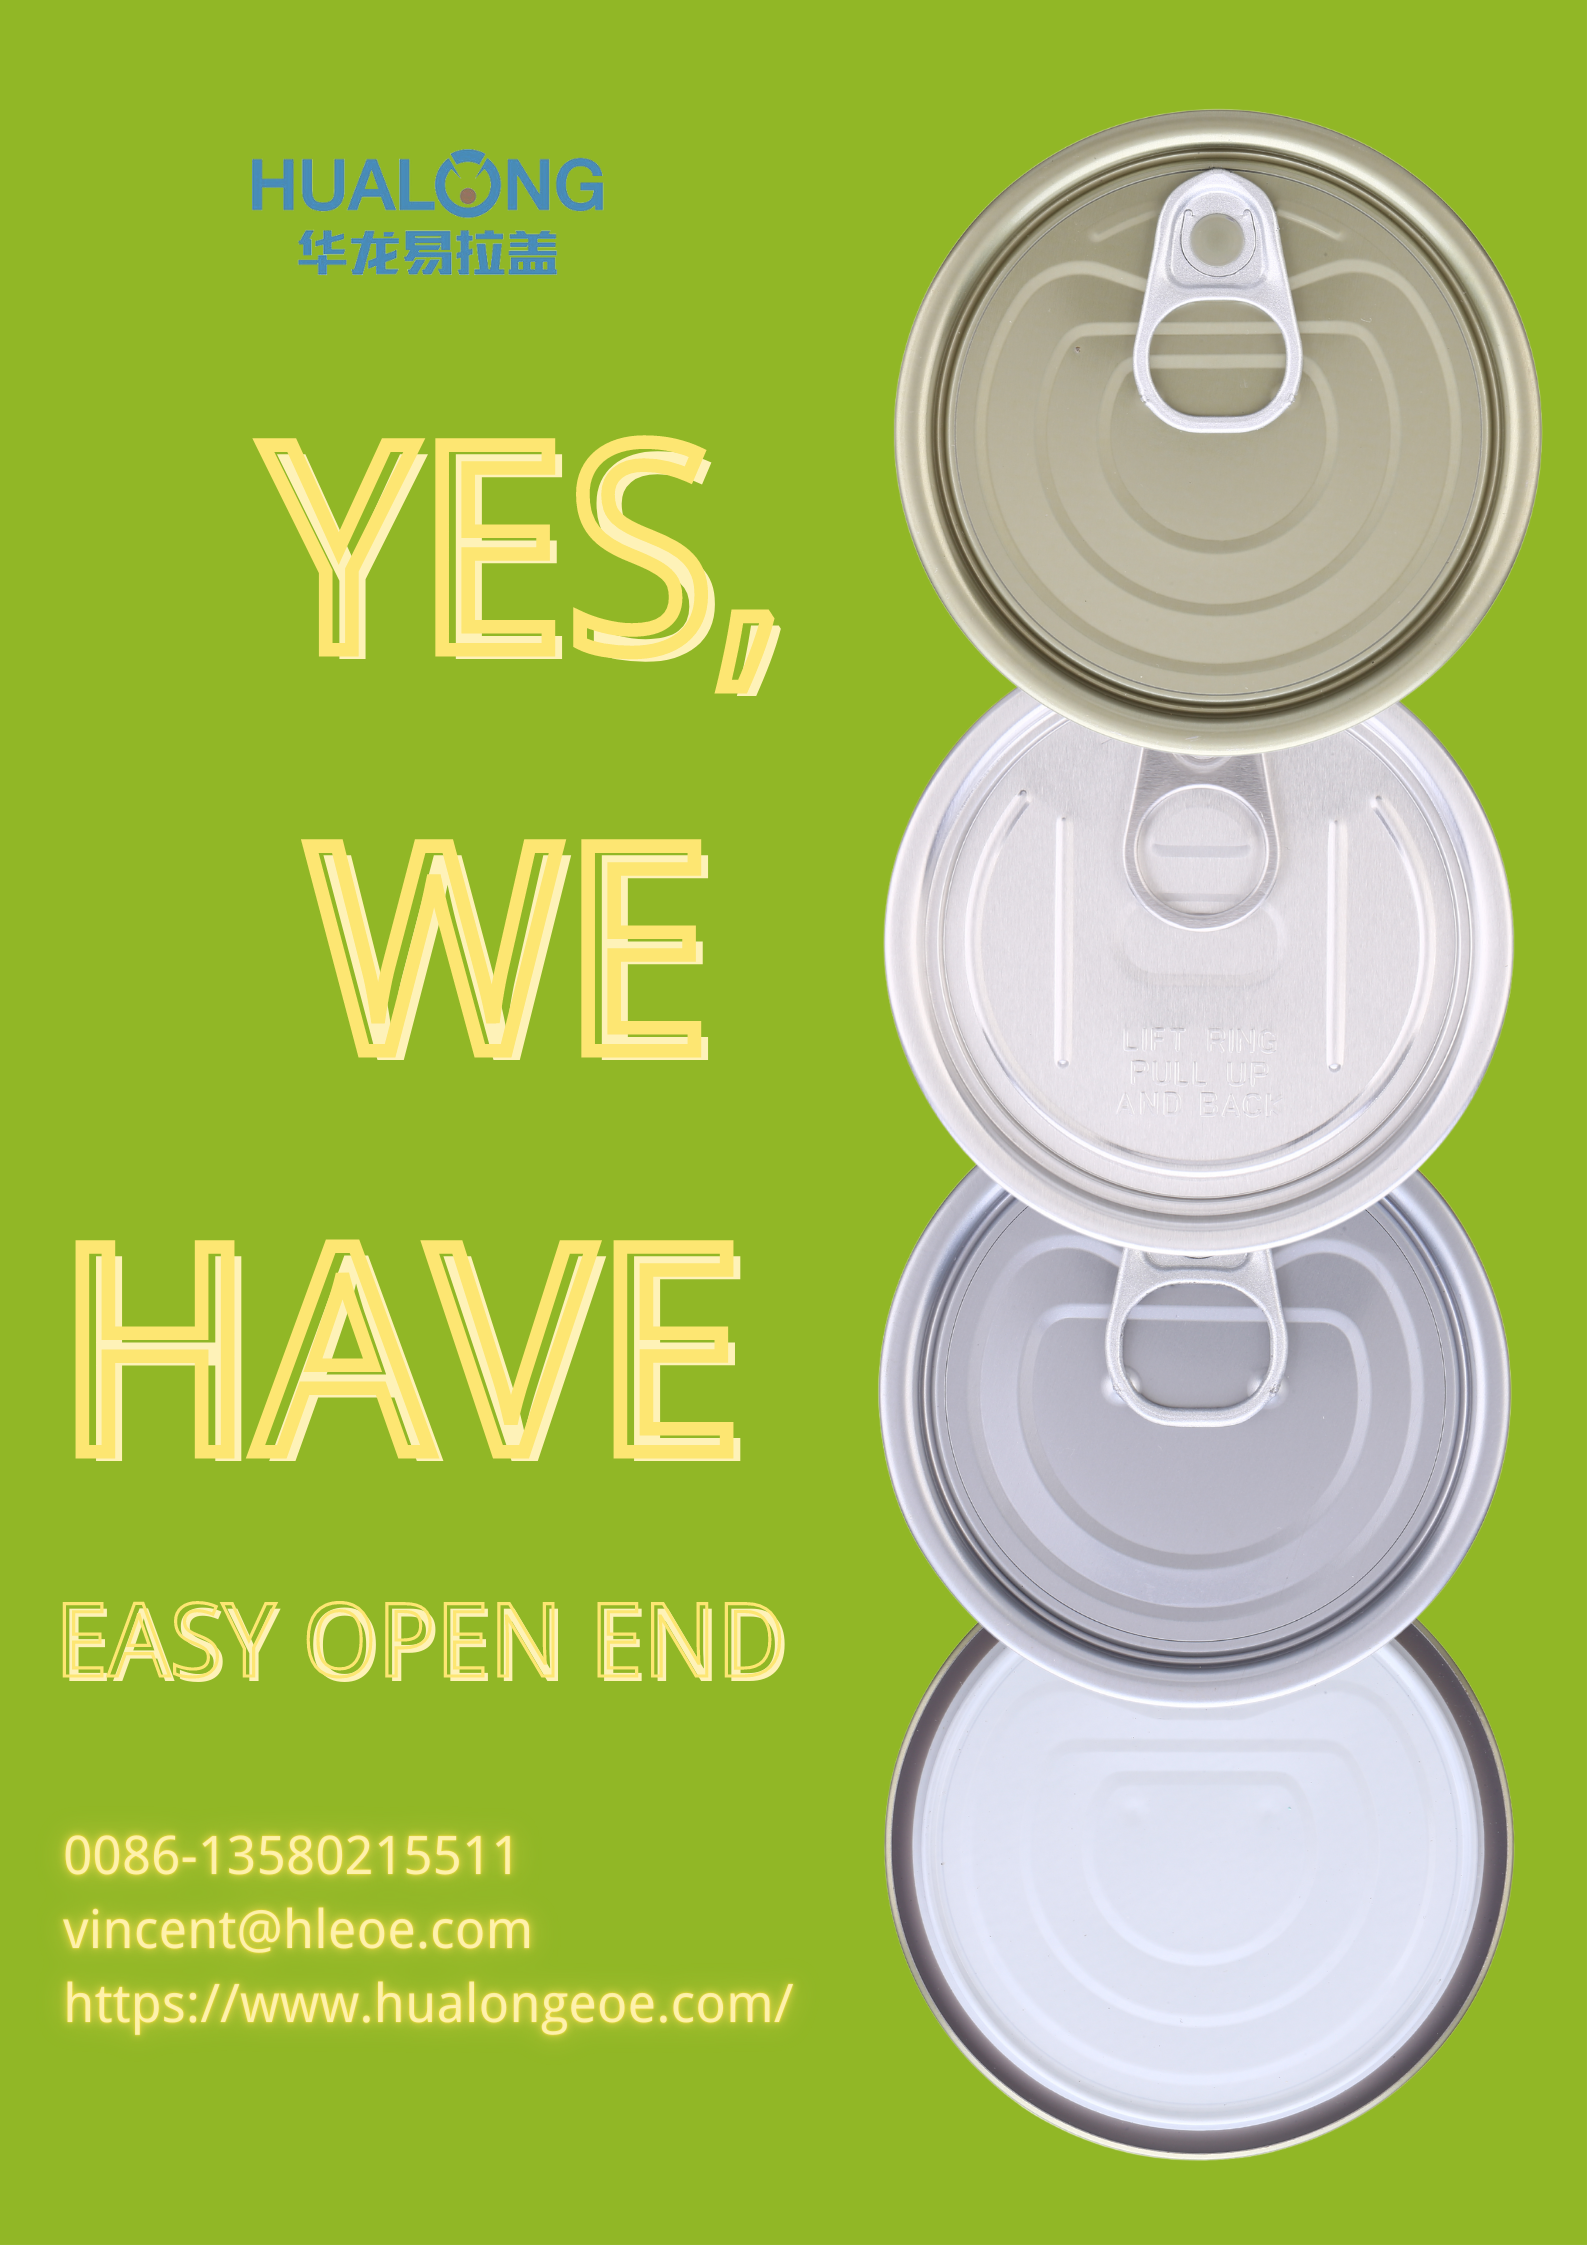 Hualong Easy Open End: Imamo sve veličine koje trebate